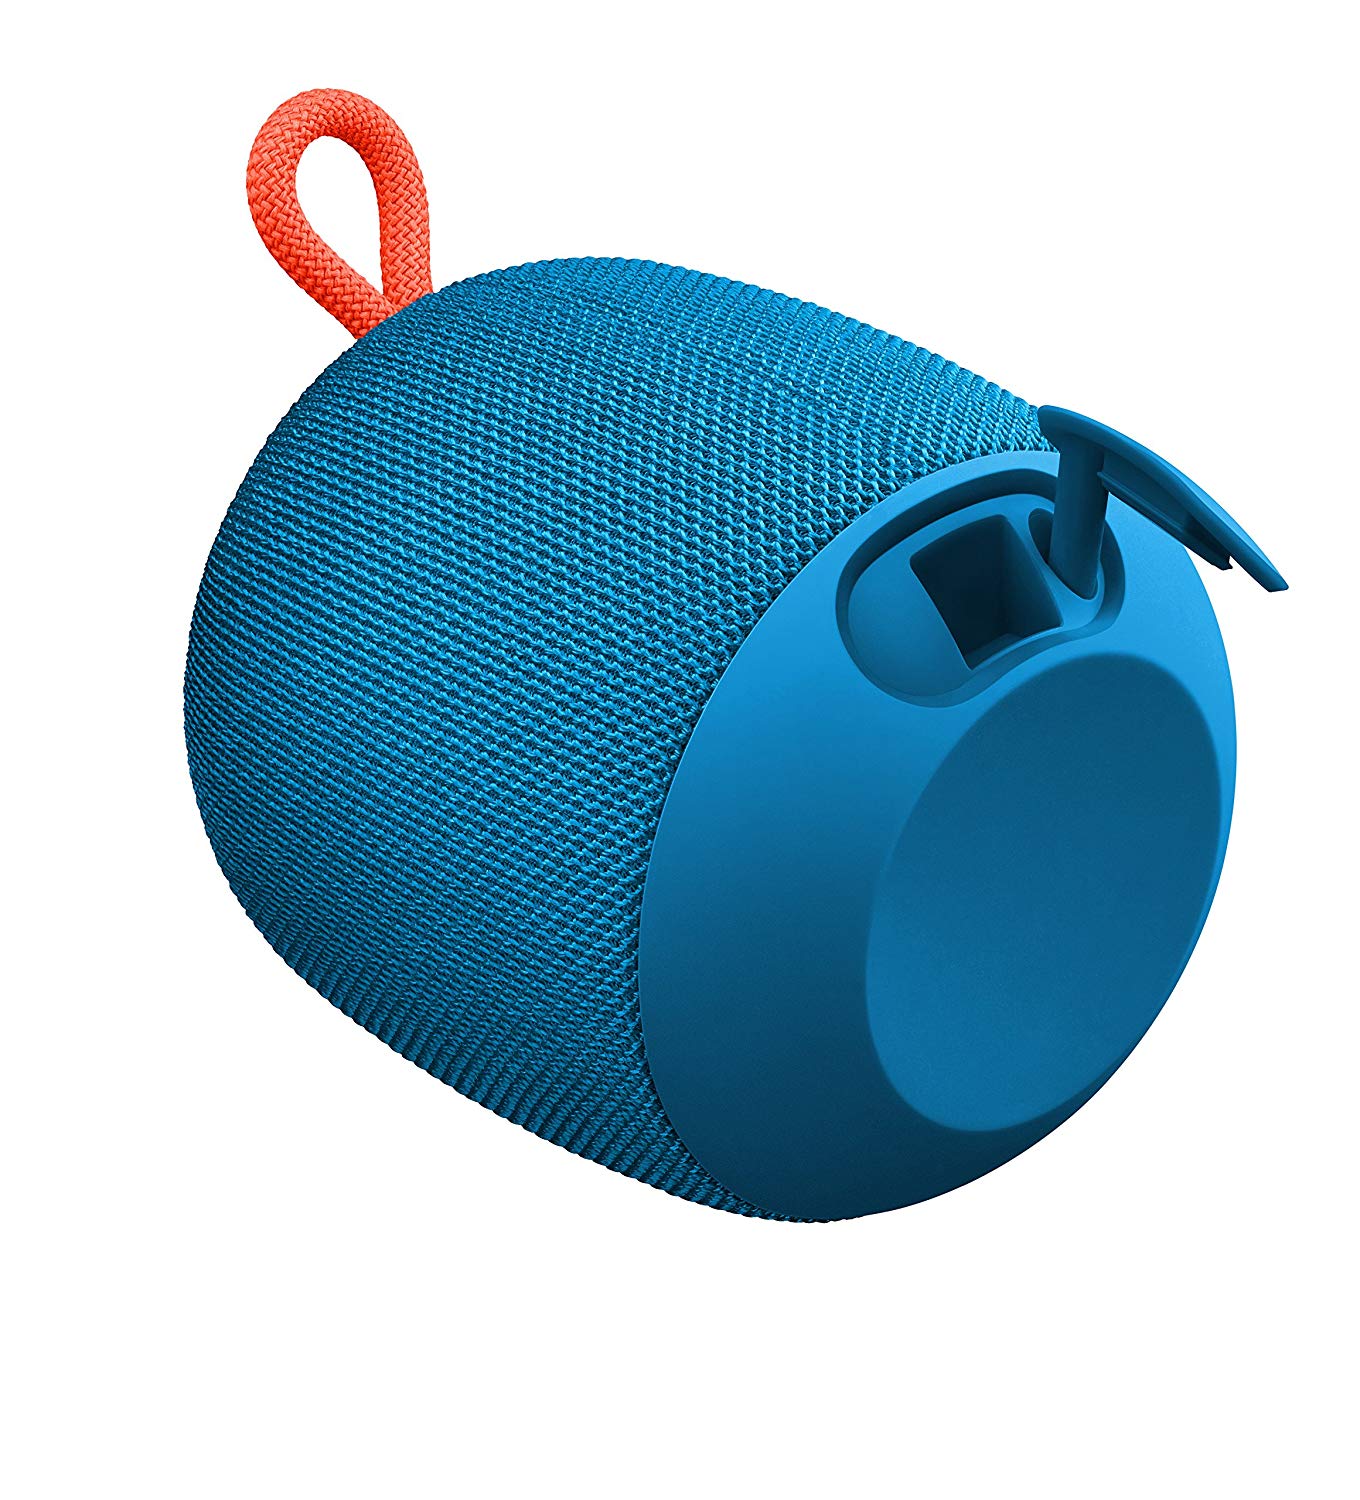 Restored UE Wonderboom by Ultimate Ears IPX7 Waterproof Bluetooth Speaker w/ 10-Hour Battery Life & 360-degree sound - Subzero Blue (Refurbished) - image 5 of 6